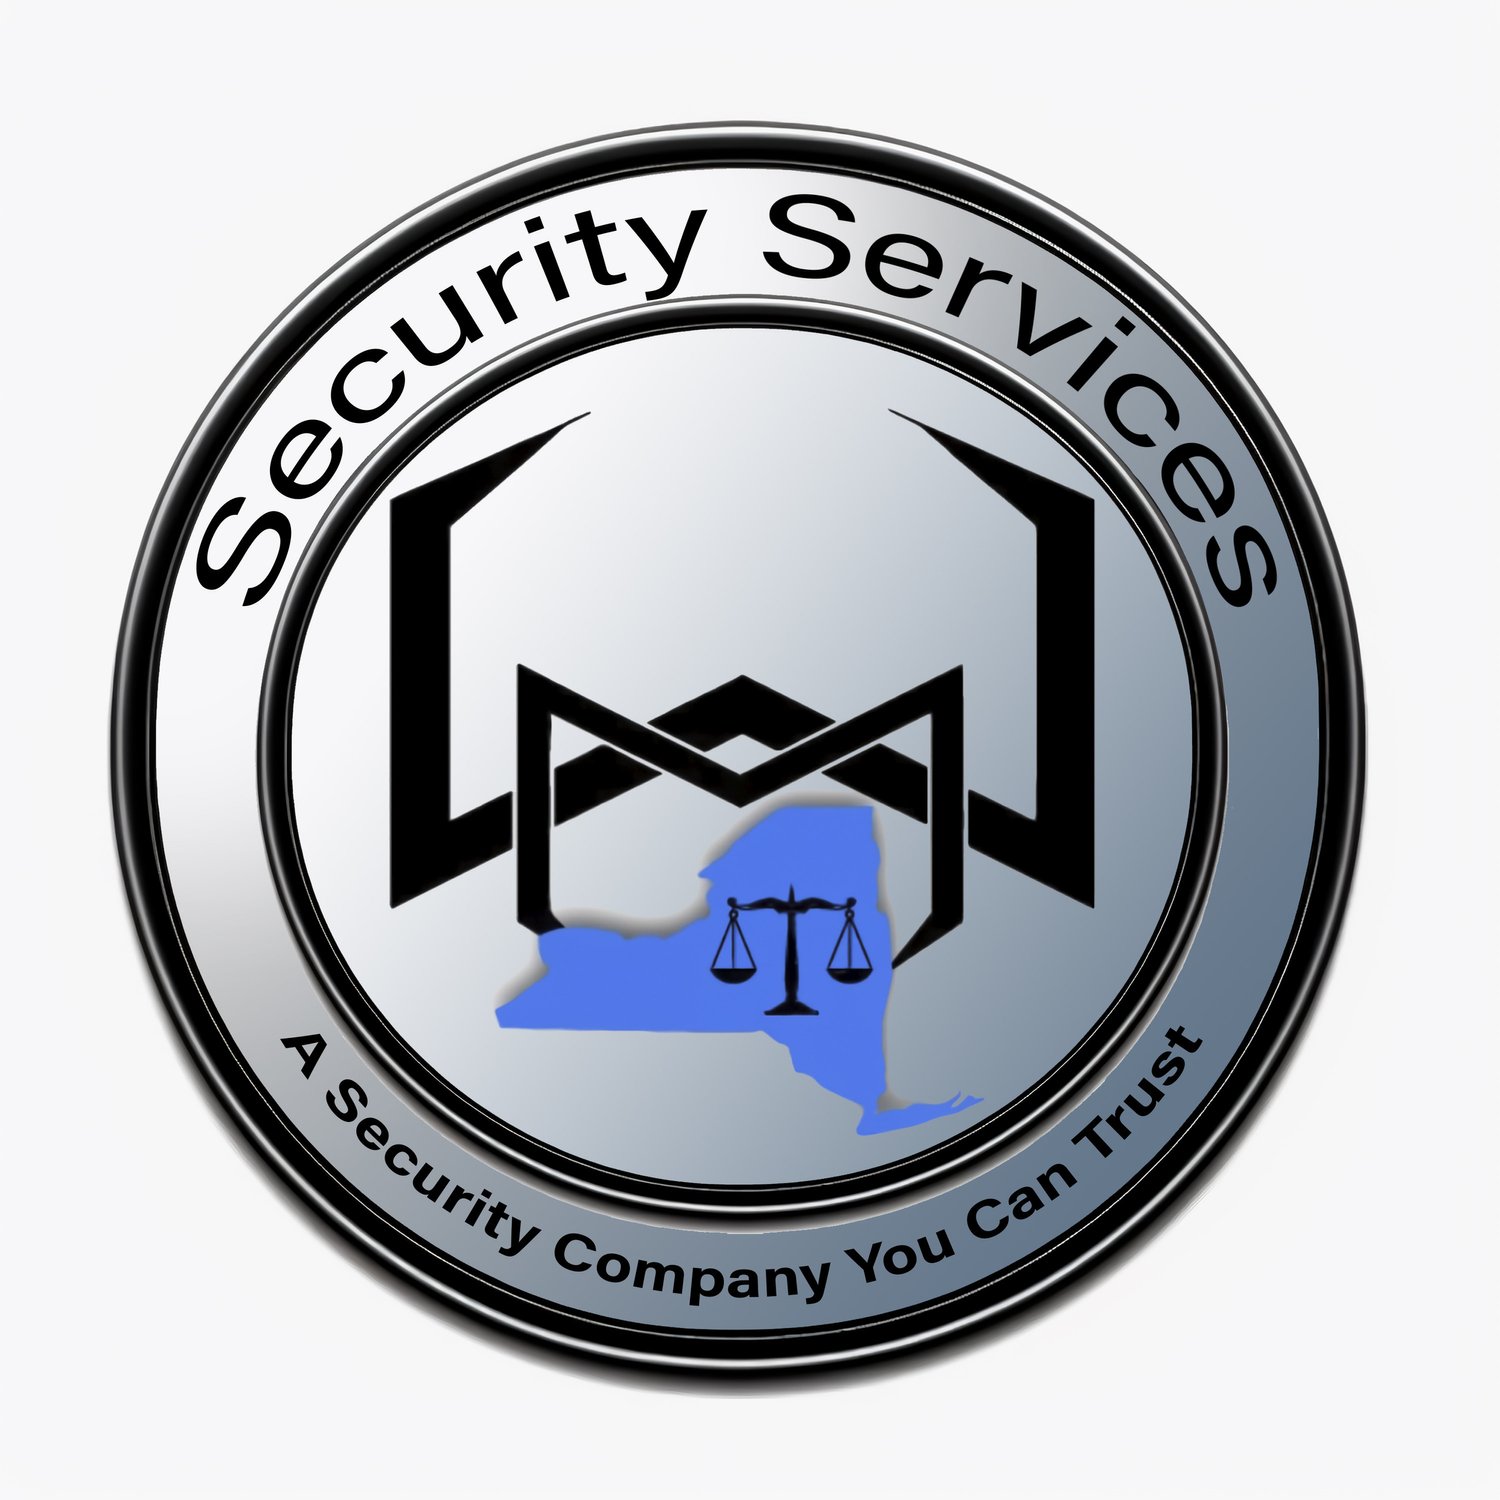 WM Security Services